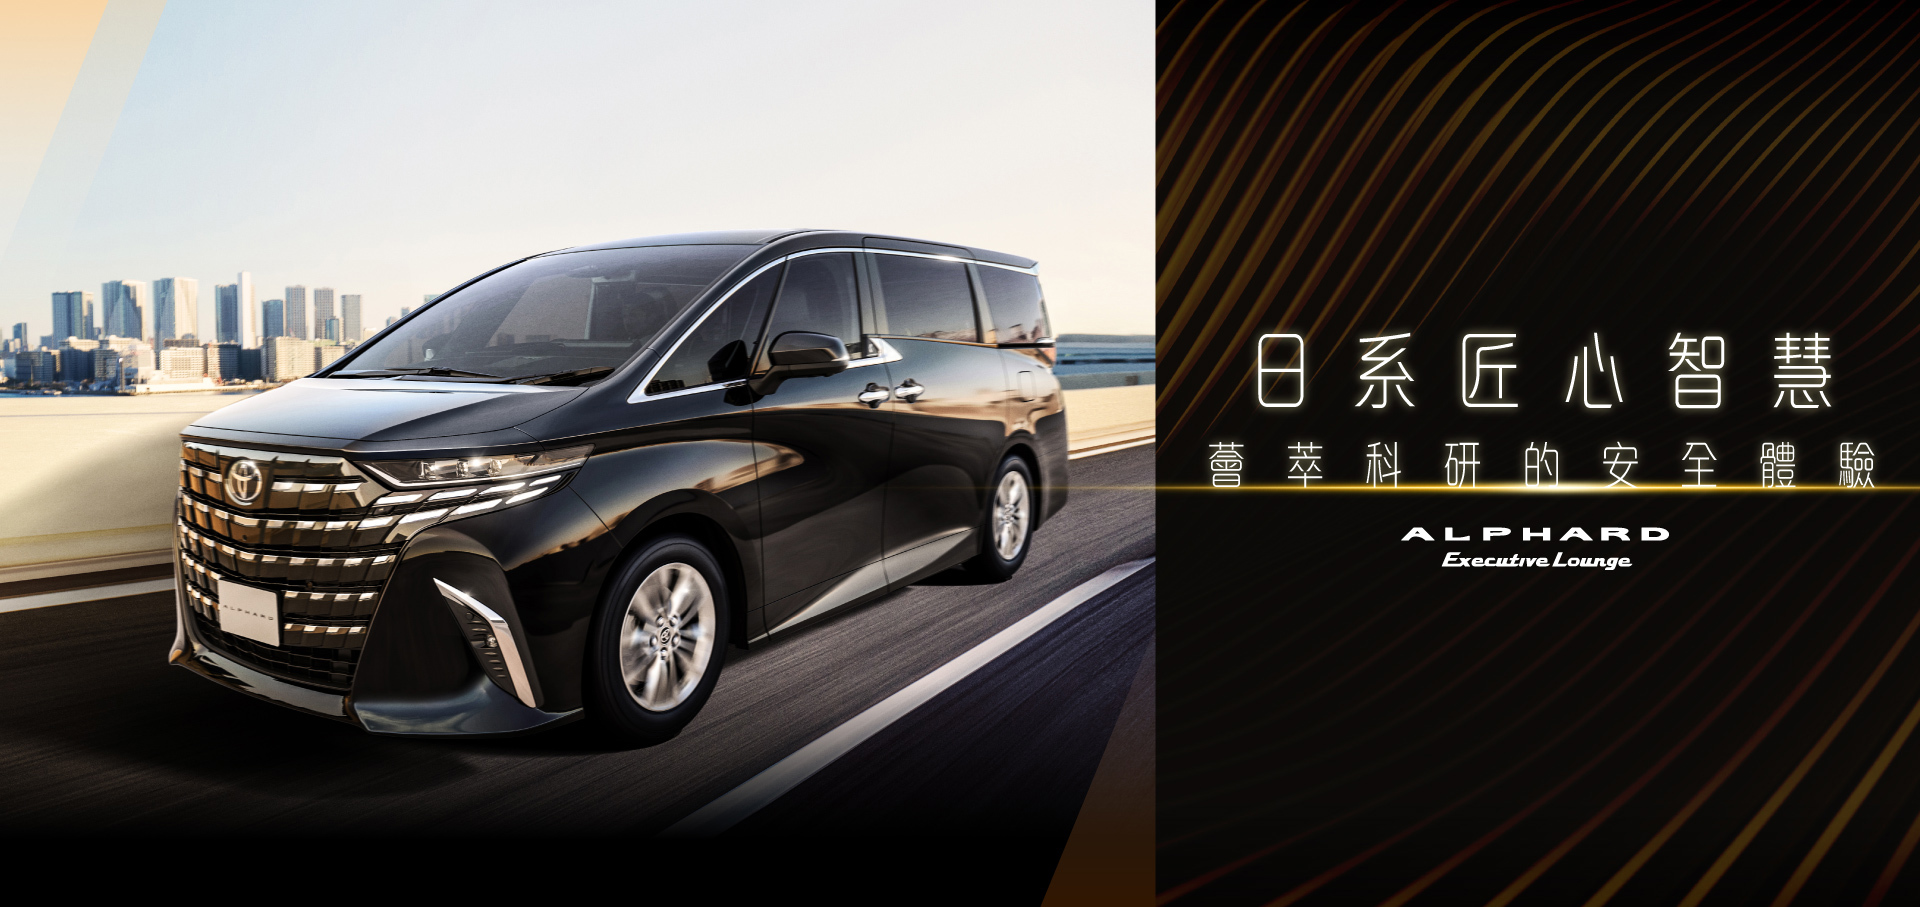 ALPHARD Executive Lounge｜The Perfect Luxury MPV of Omotenashi - Preferred Choice of Business Leaders